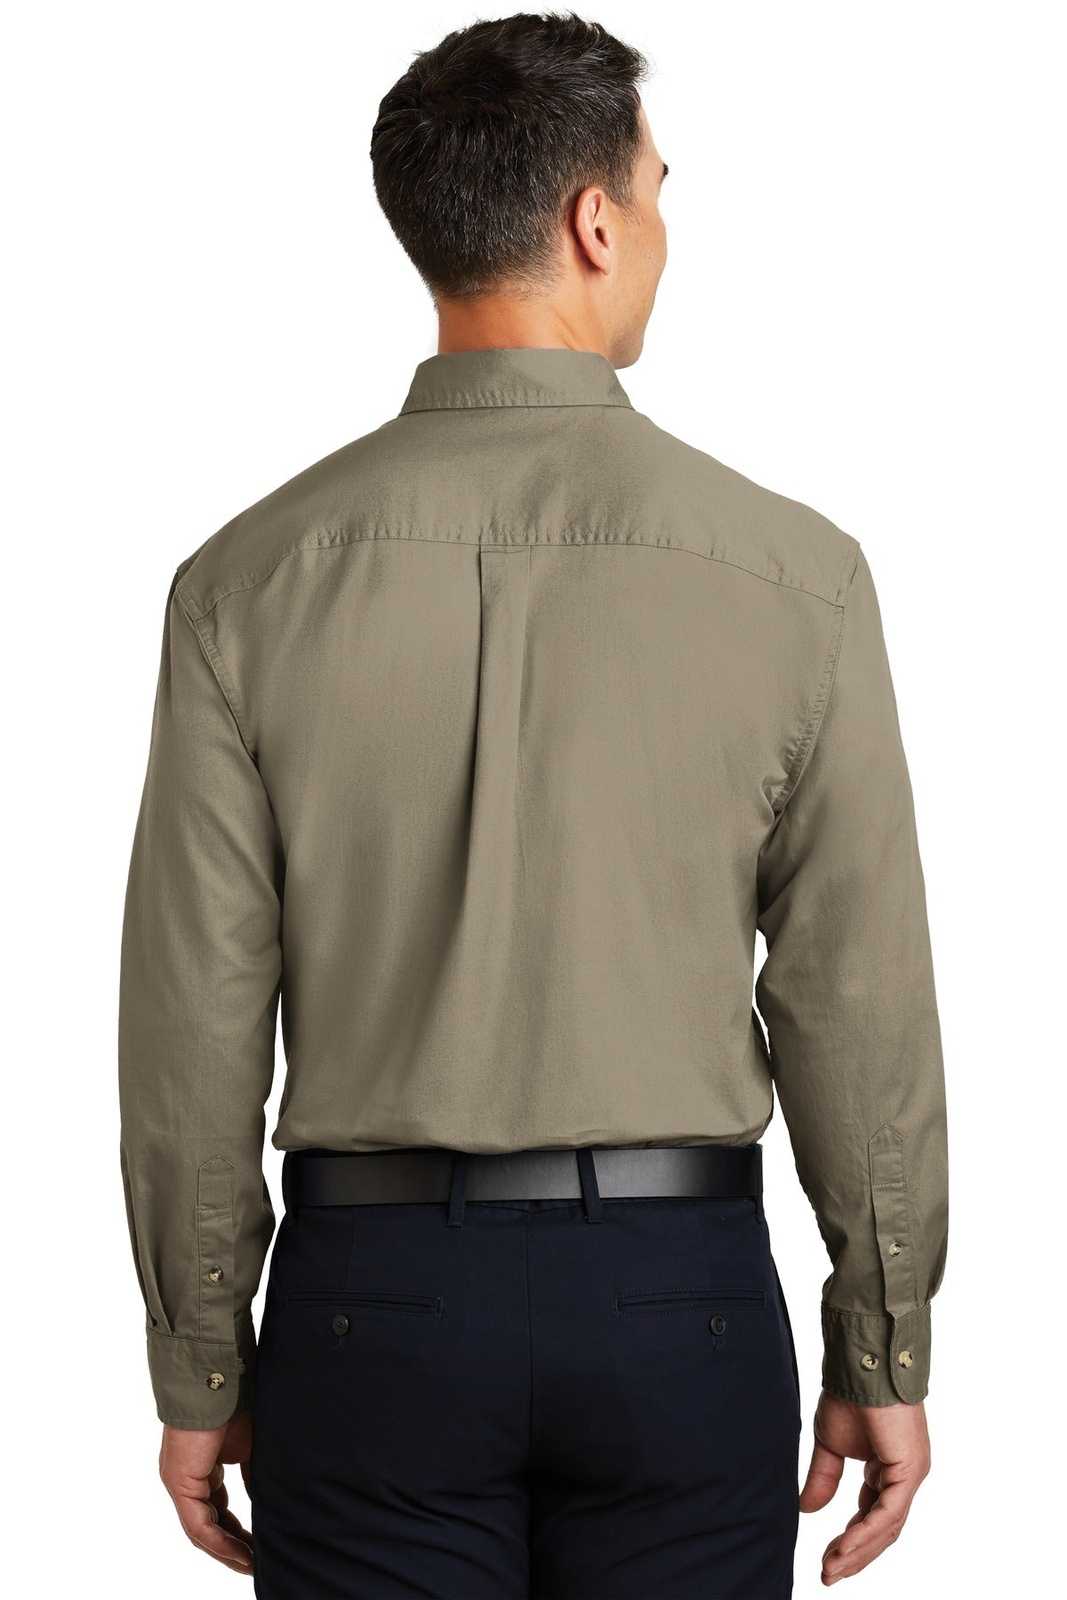 Port Authority S600T Long Sleeve Twill Shirt - Khaki - HIT a Double - 2